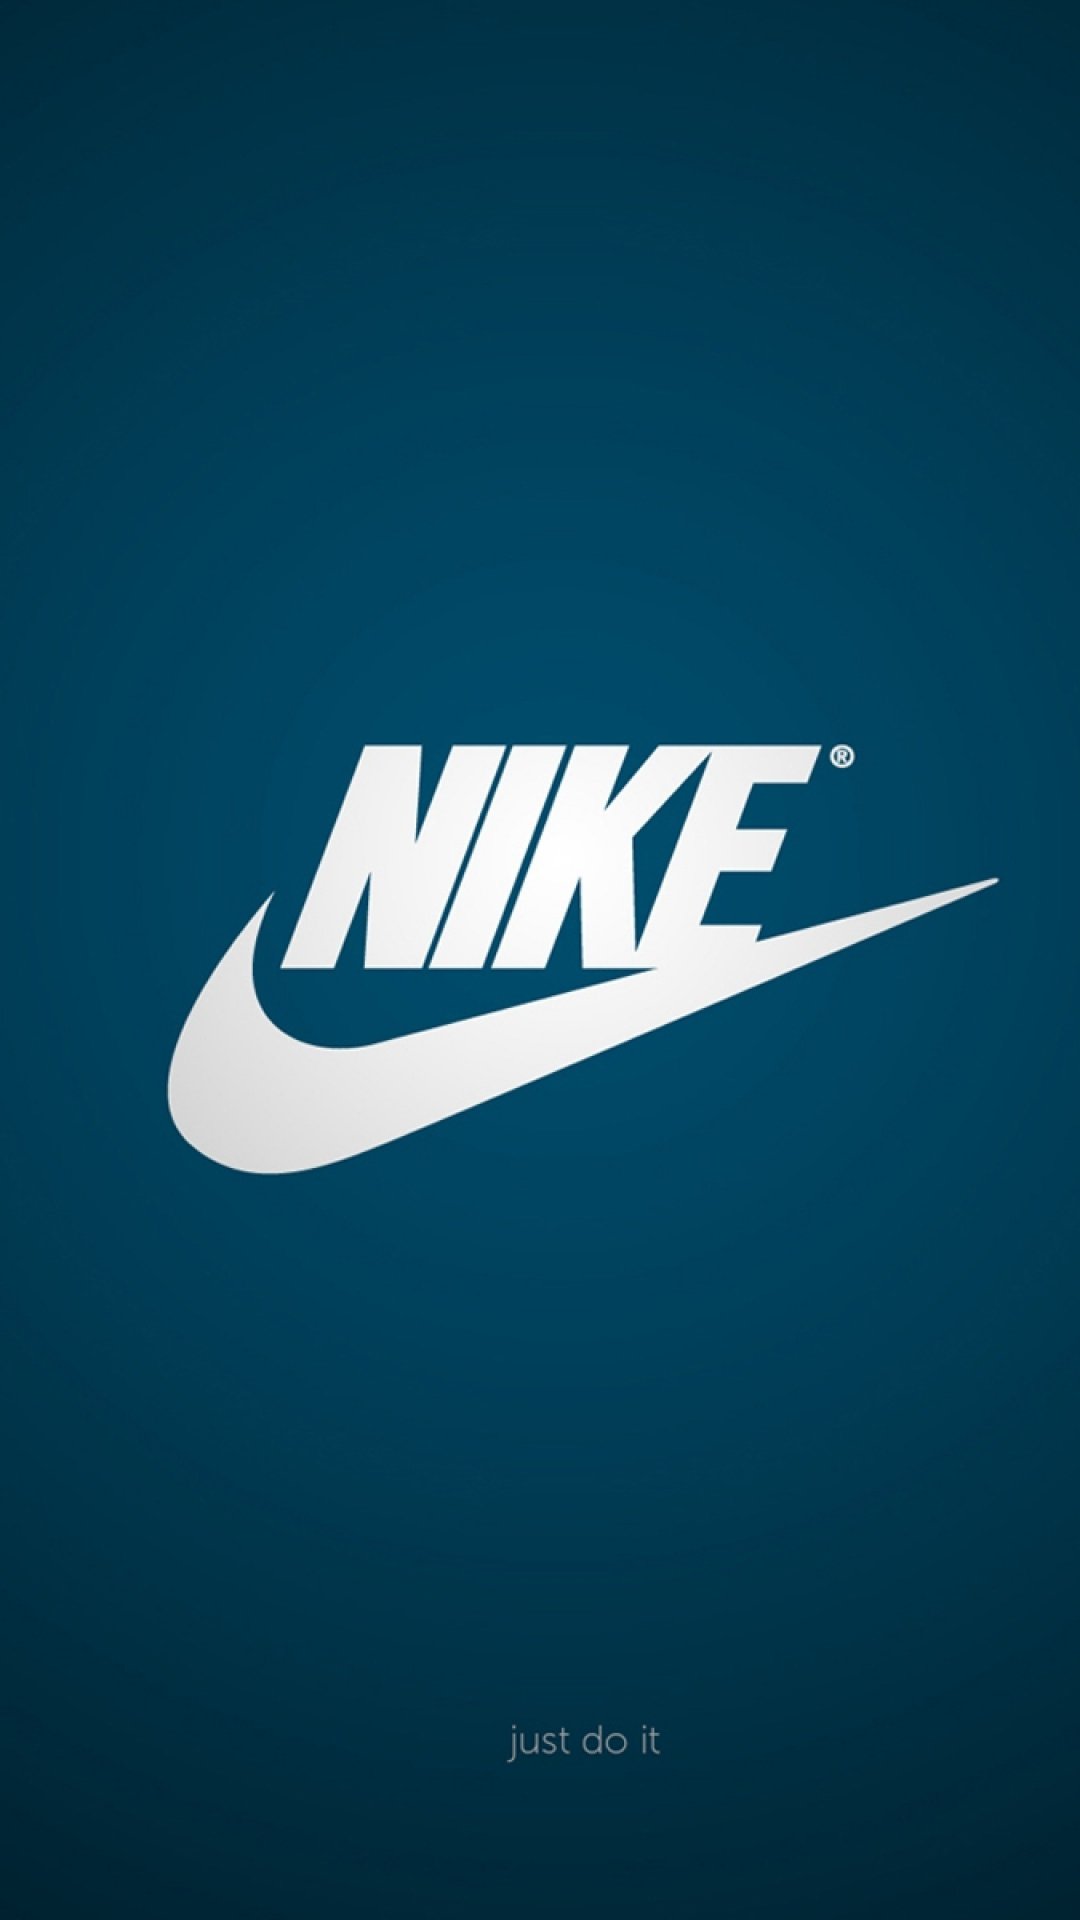 Download Free Nike Wallpapers for Iphone | PixelsTalk.Net